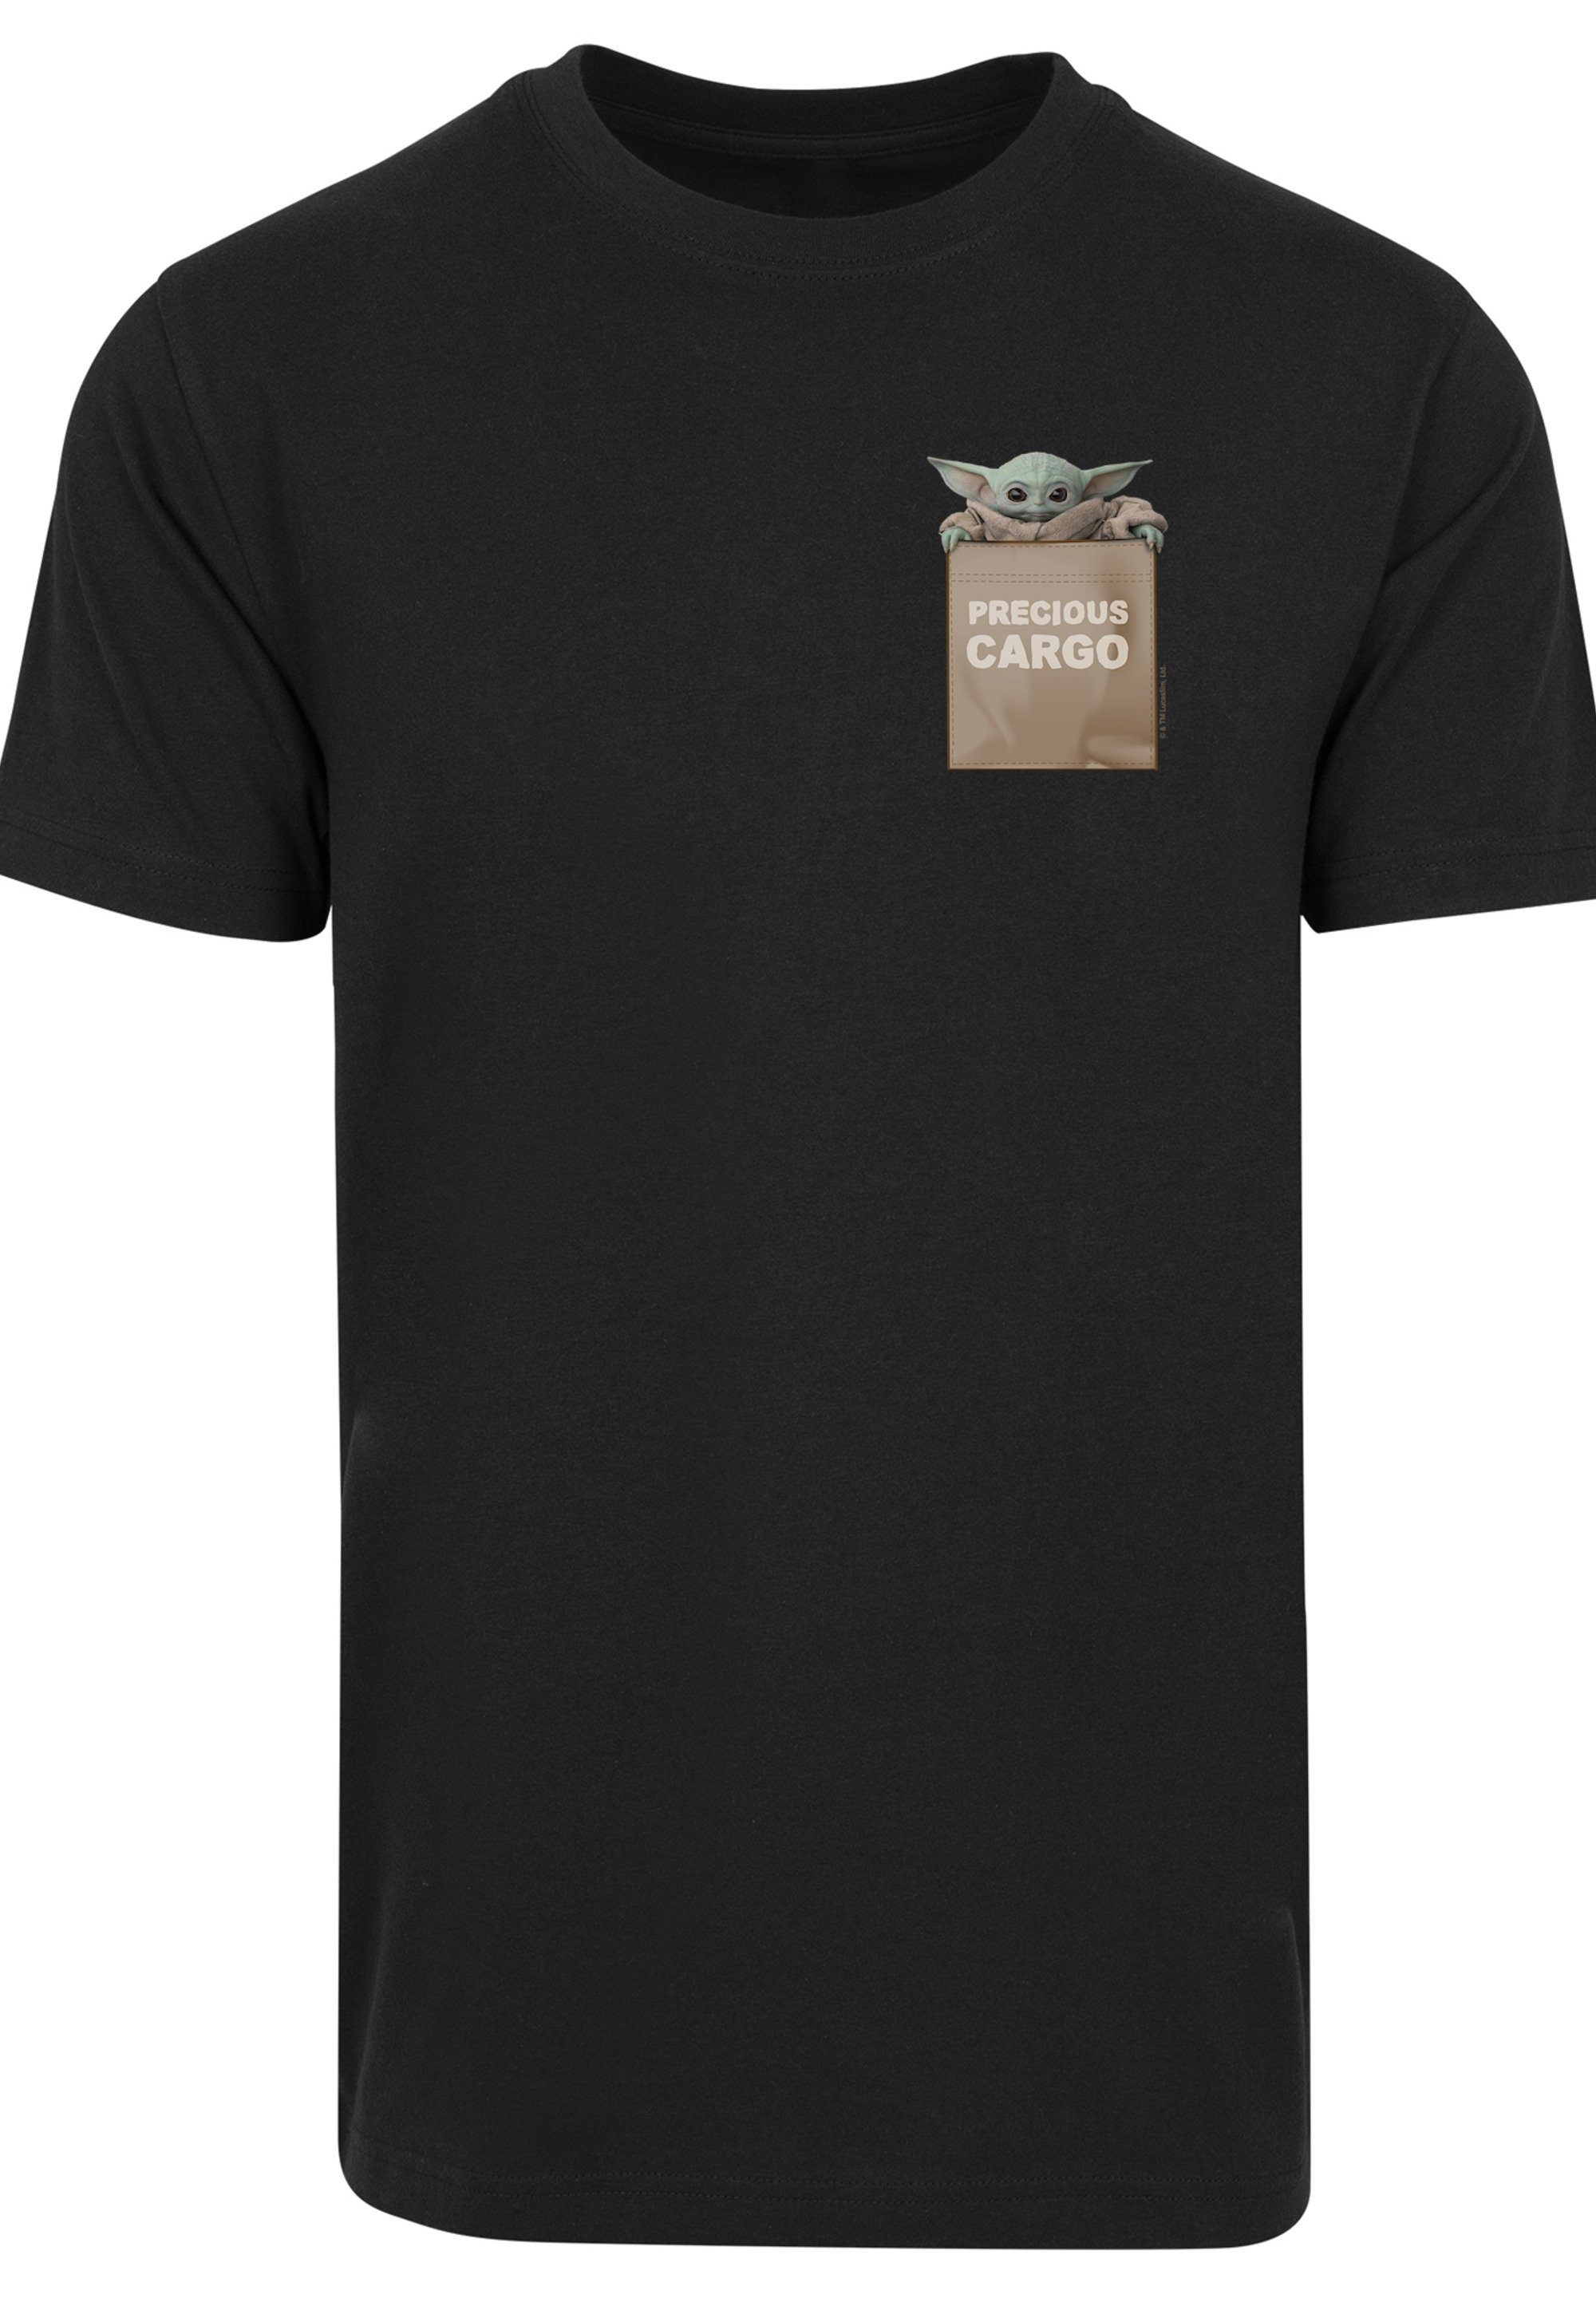 F4NT4STIC T-Shirt Cargo Grogu Precious Das schwarz Mandalorian Wars Merch,Regular-Fit,Basic,Bedruckt Kind Herren,Premium Star